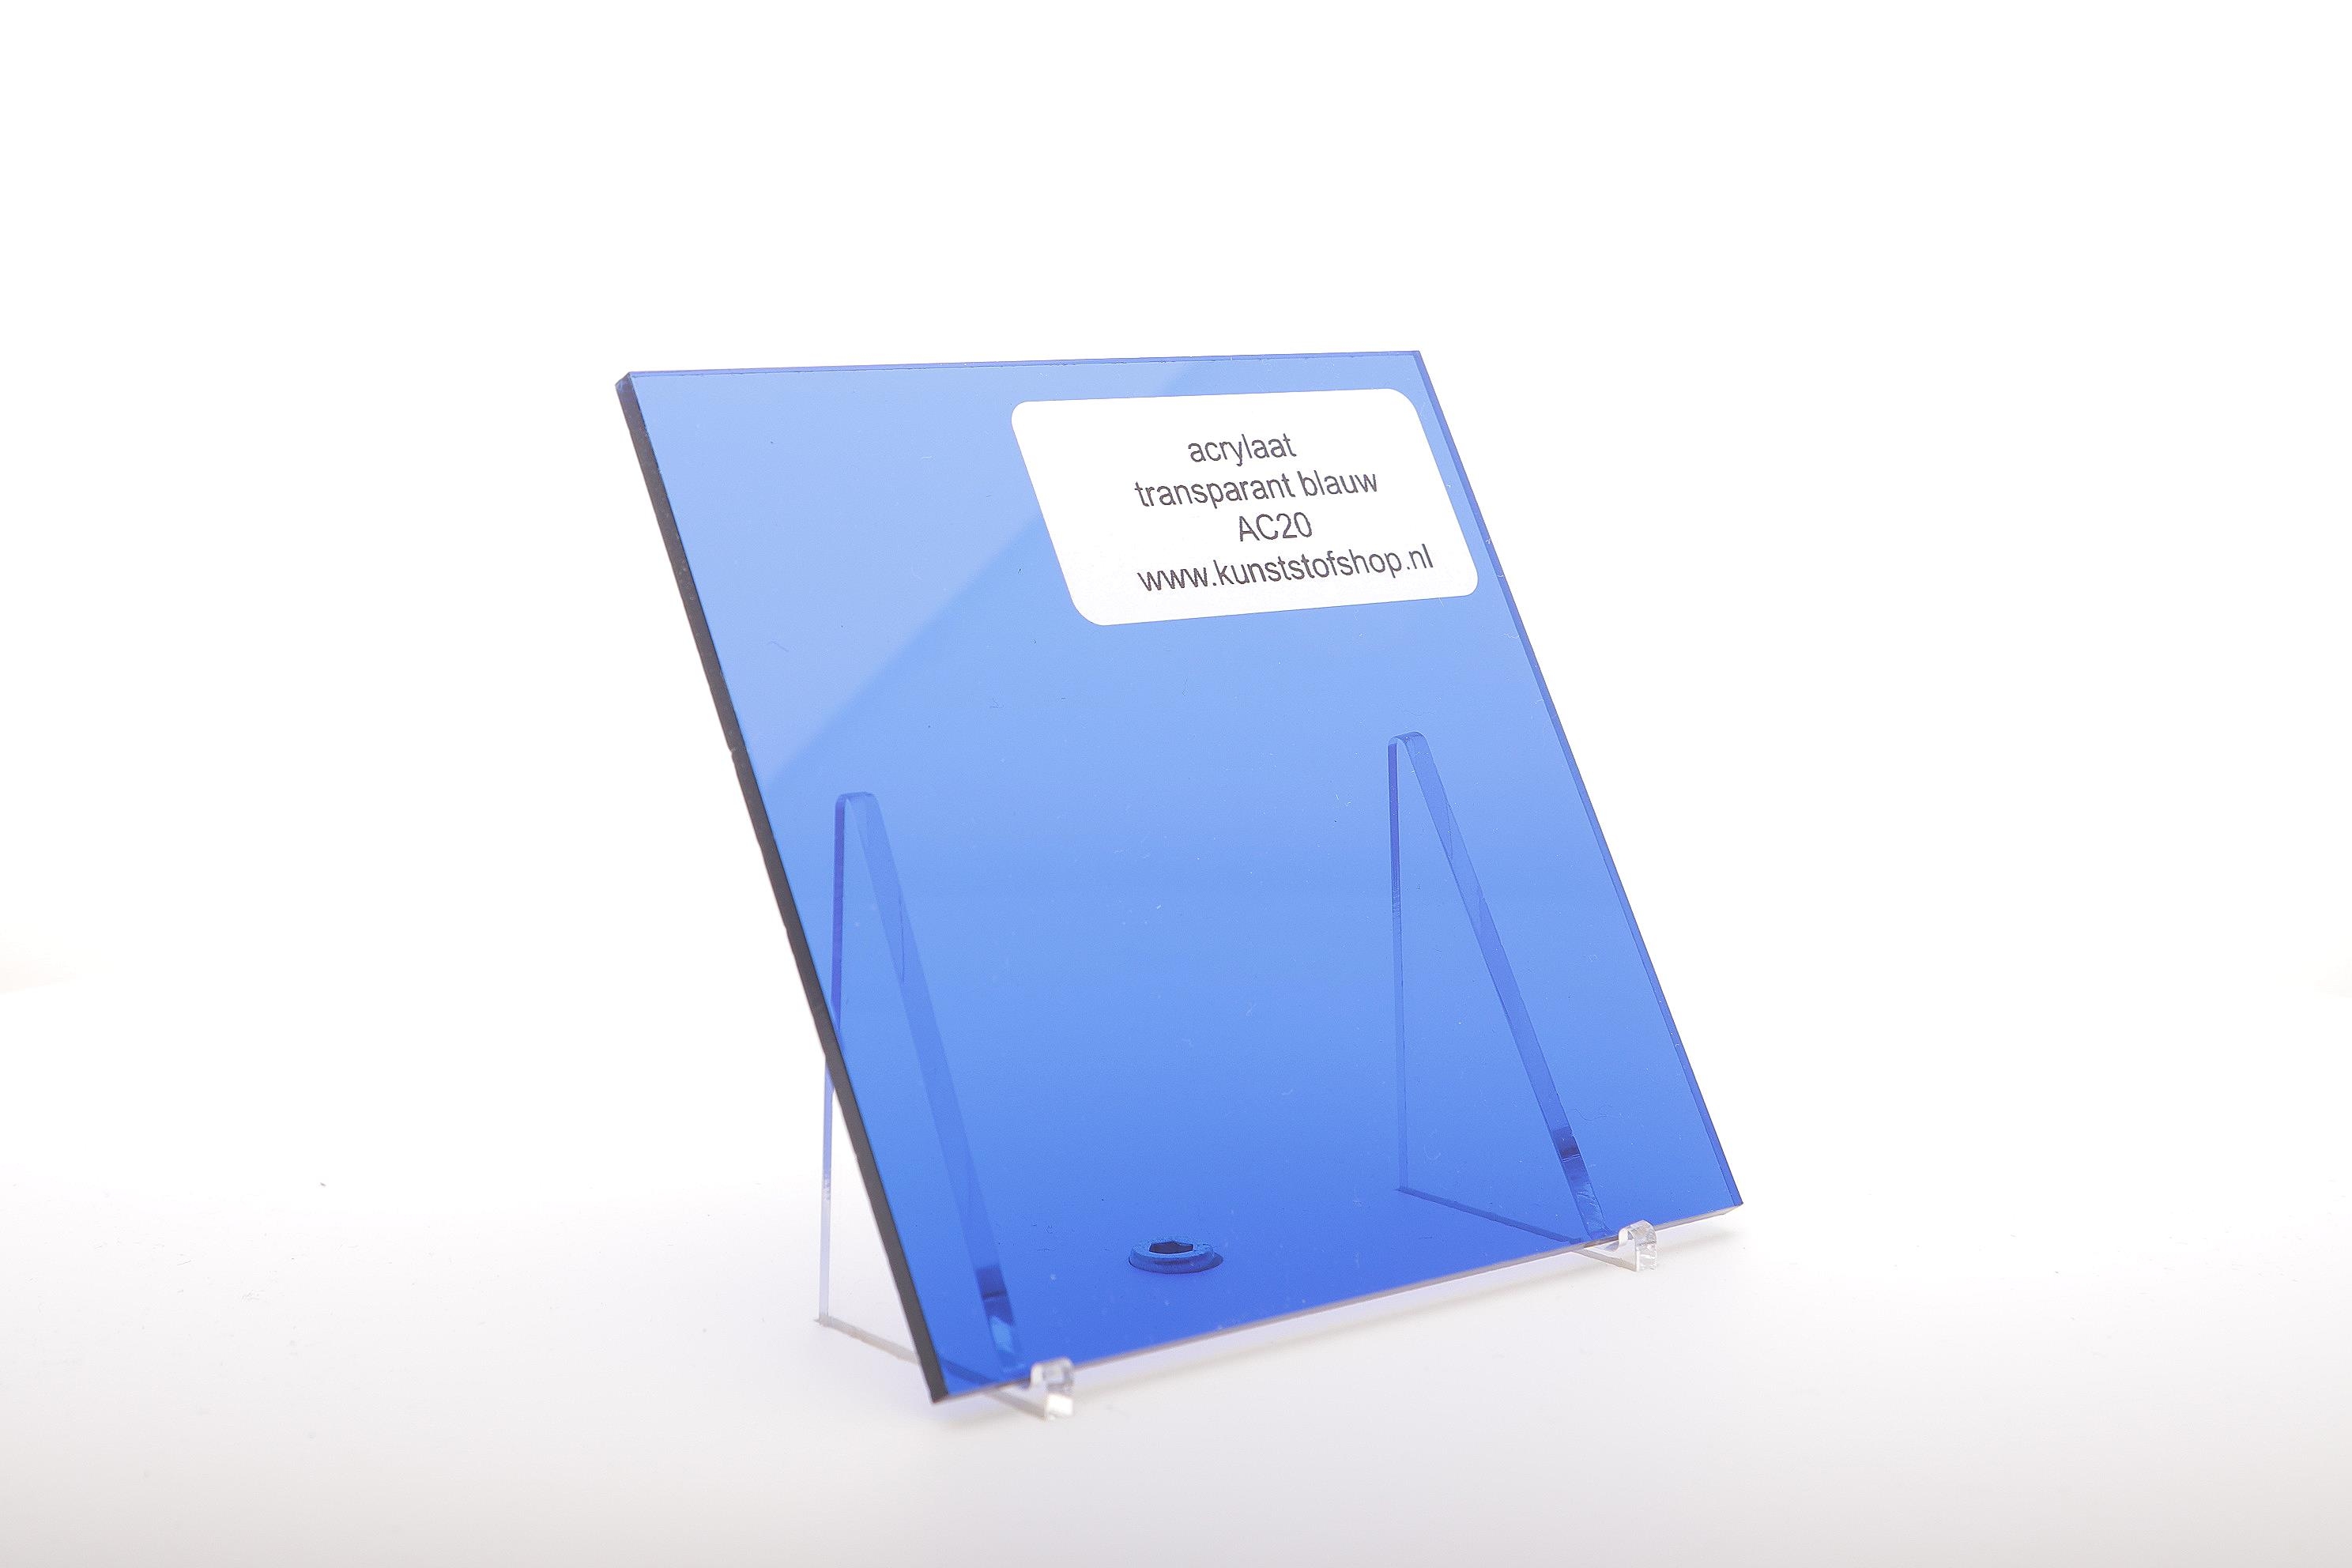 Acrylaat plaat transparant blauw AC20